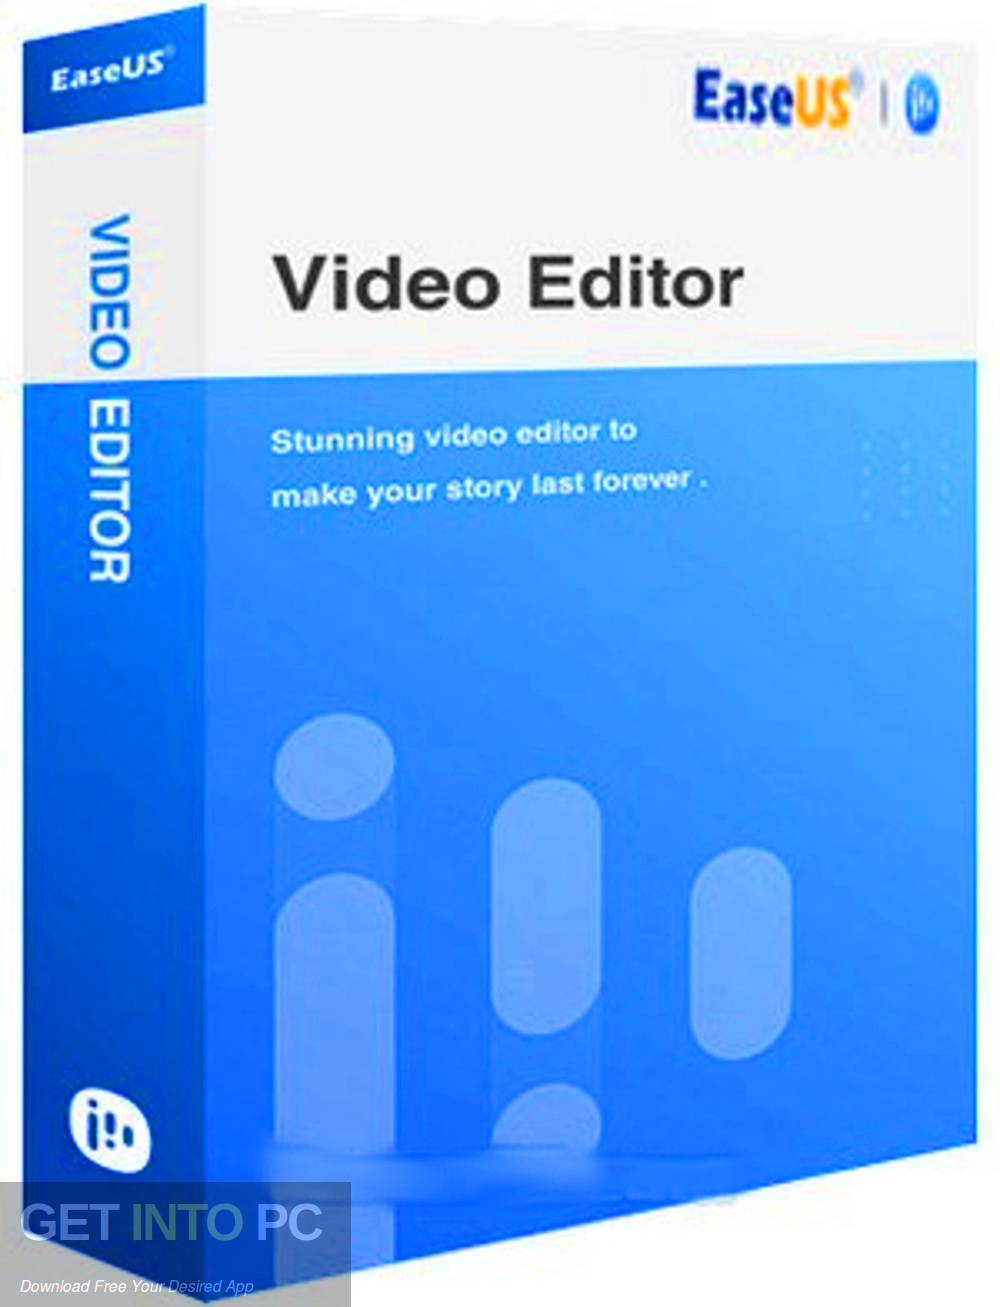 EaseUS Video Editor Free Download GetintoPC.com